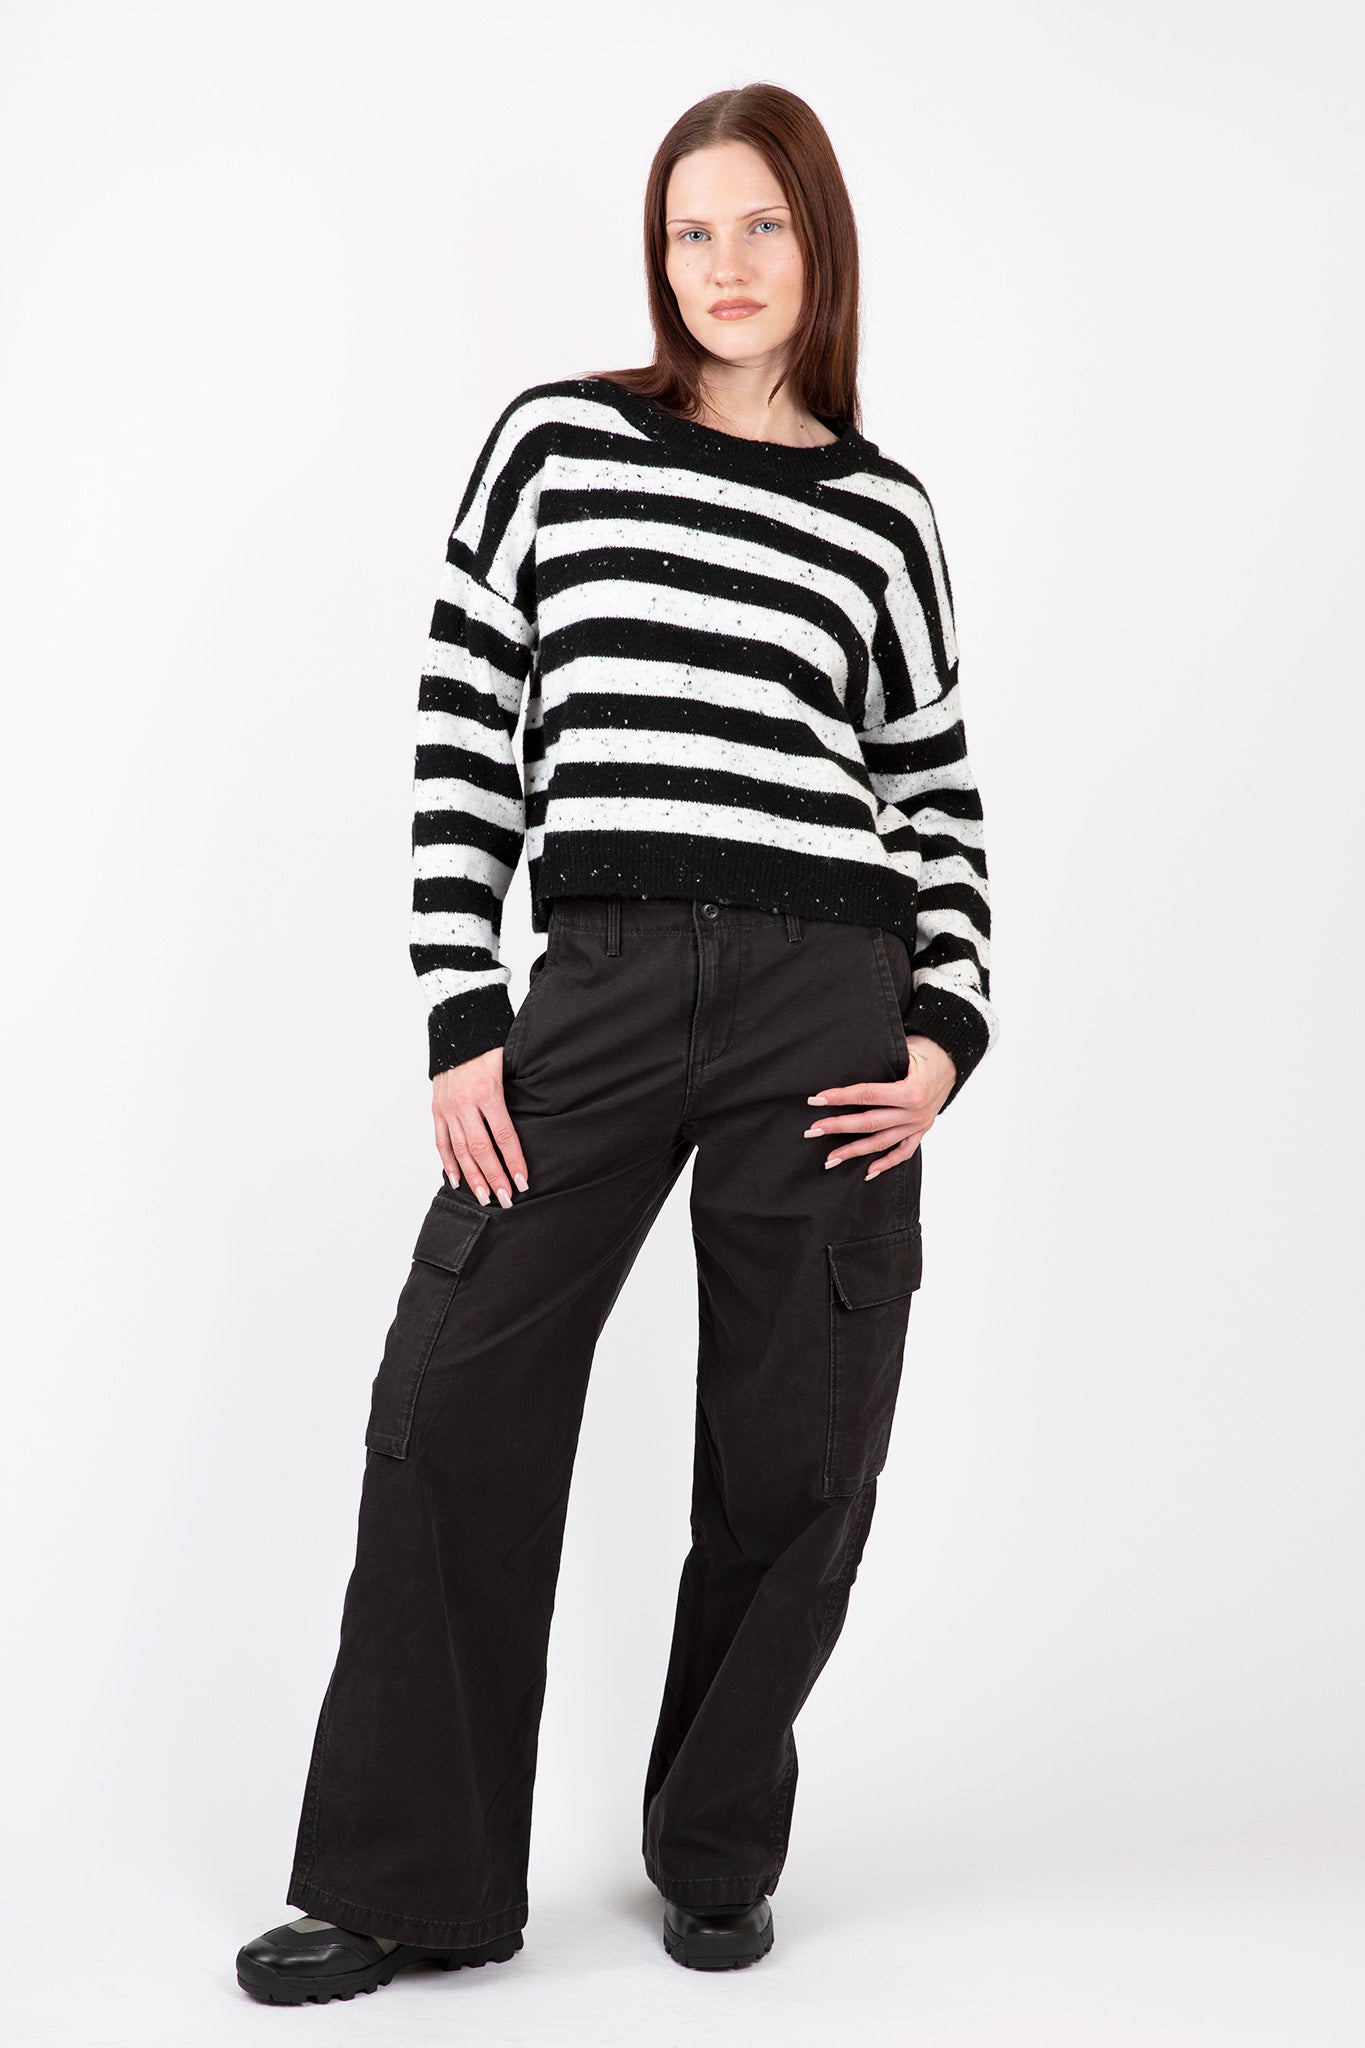    Lyla-Luxe-Jessie-Striped-Sweater-Black-White-Fleck